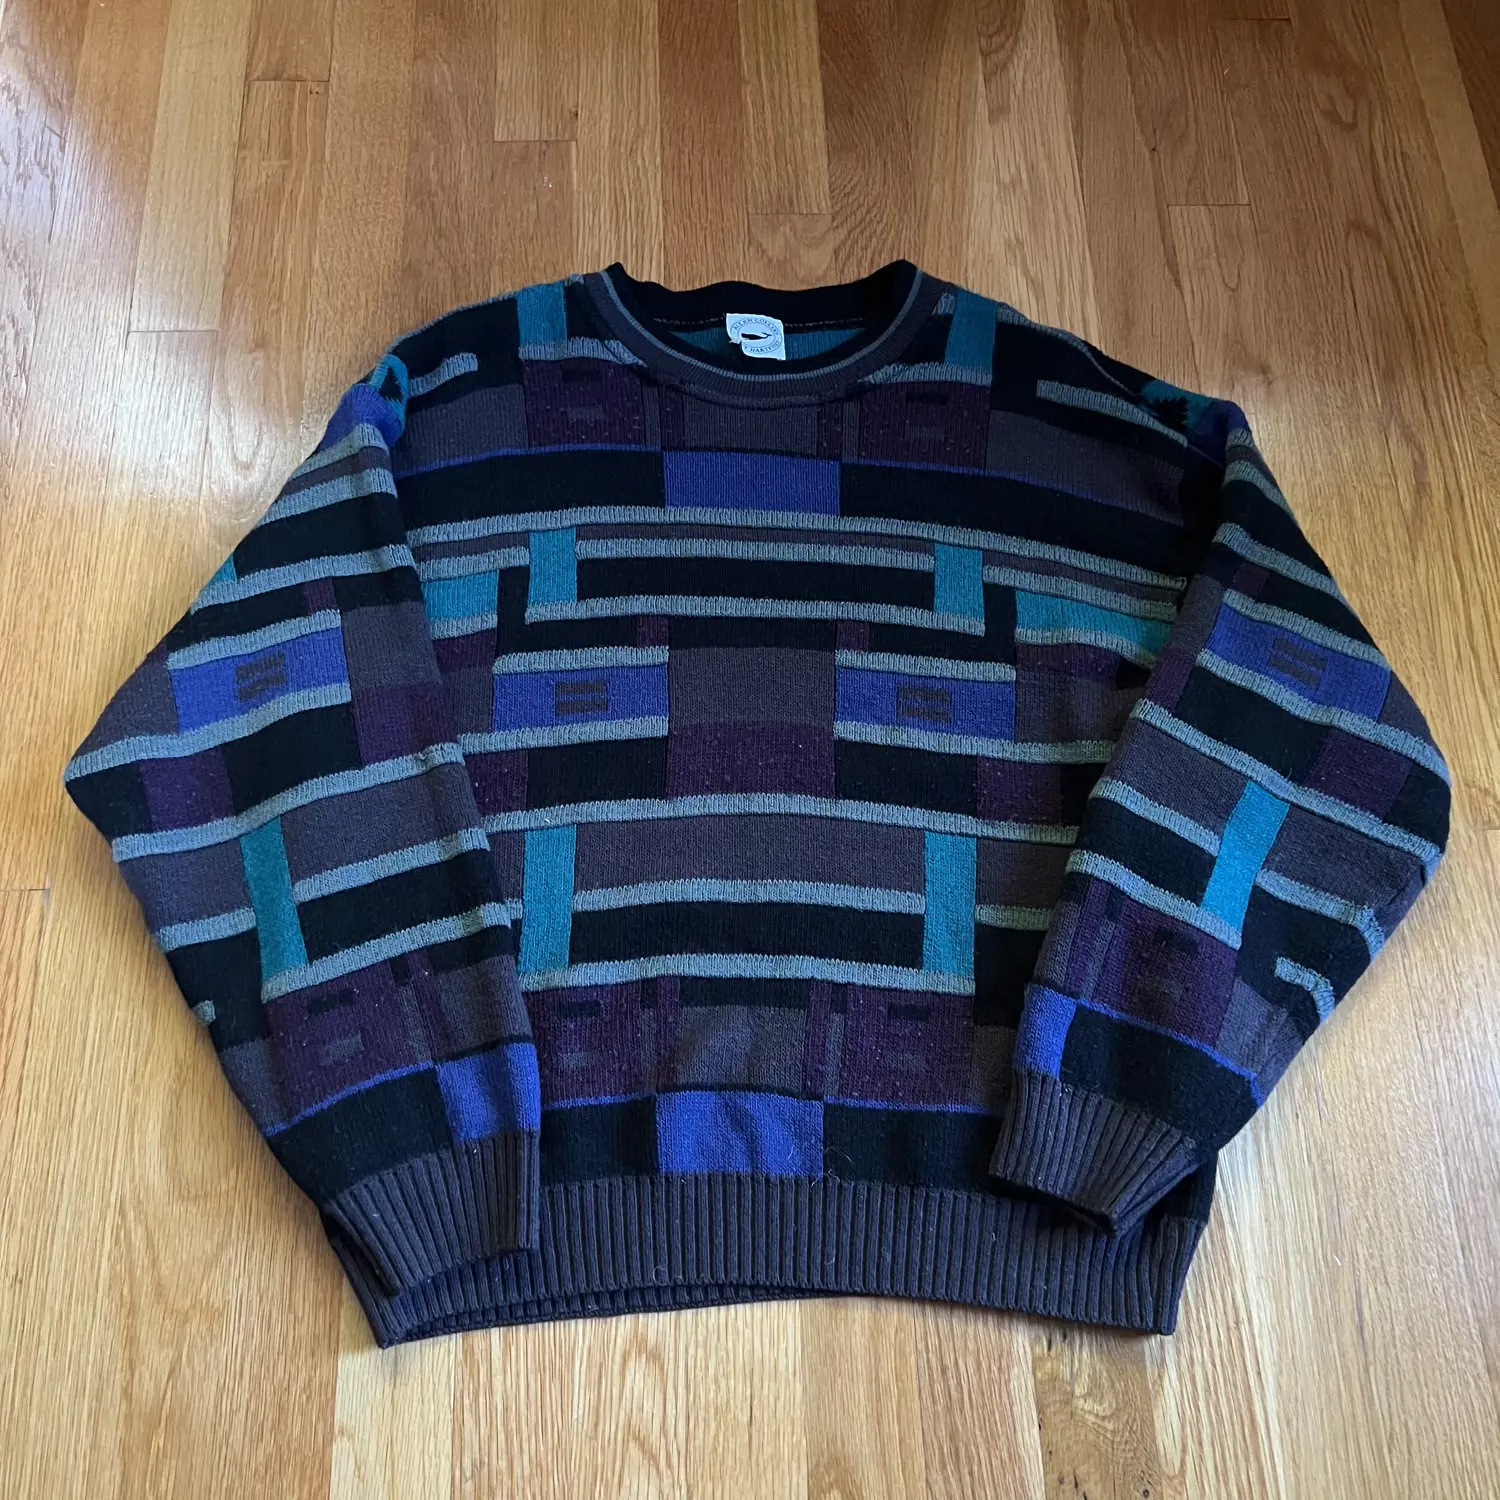 Vintage 90’s Geometric Sweater (M)